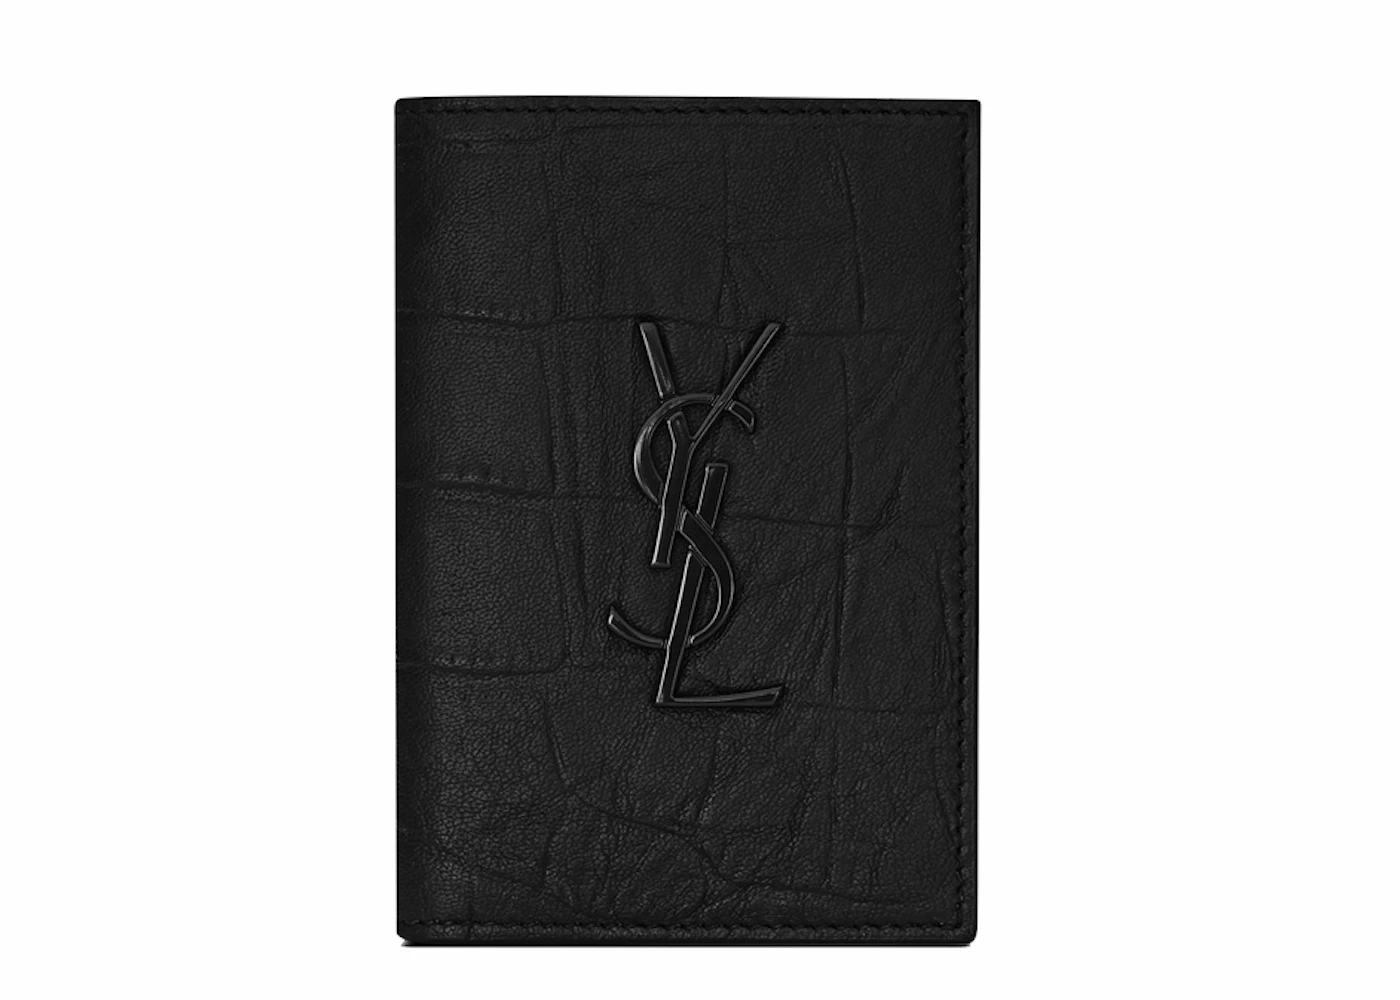 Ysl croc embossed leather wallet - Saint Laurent - Men